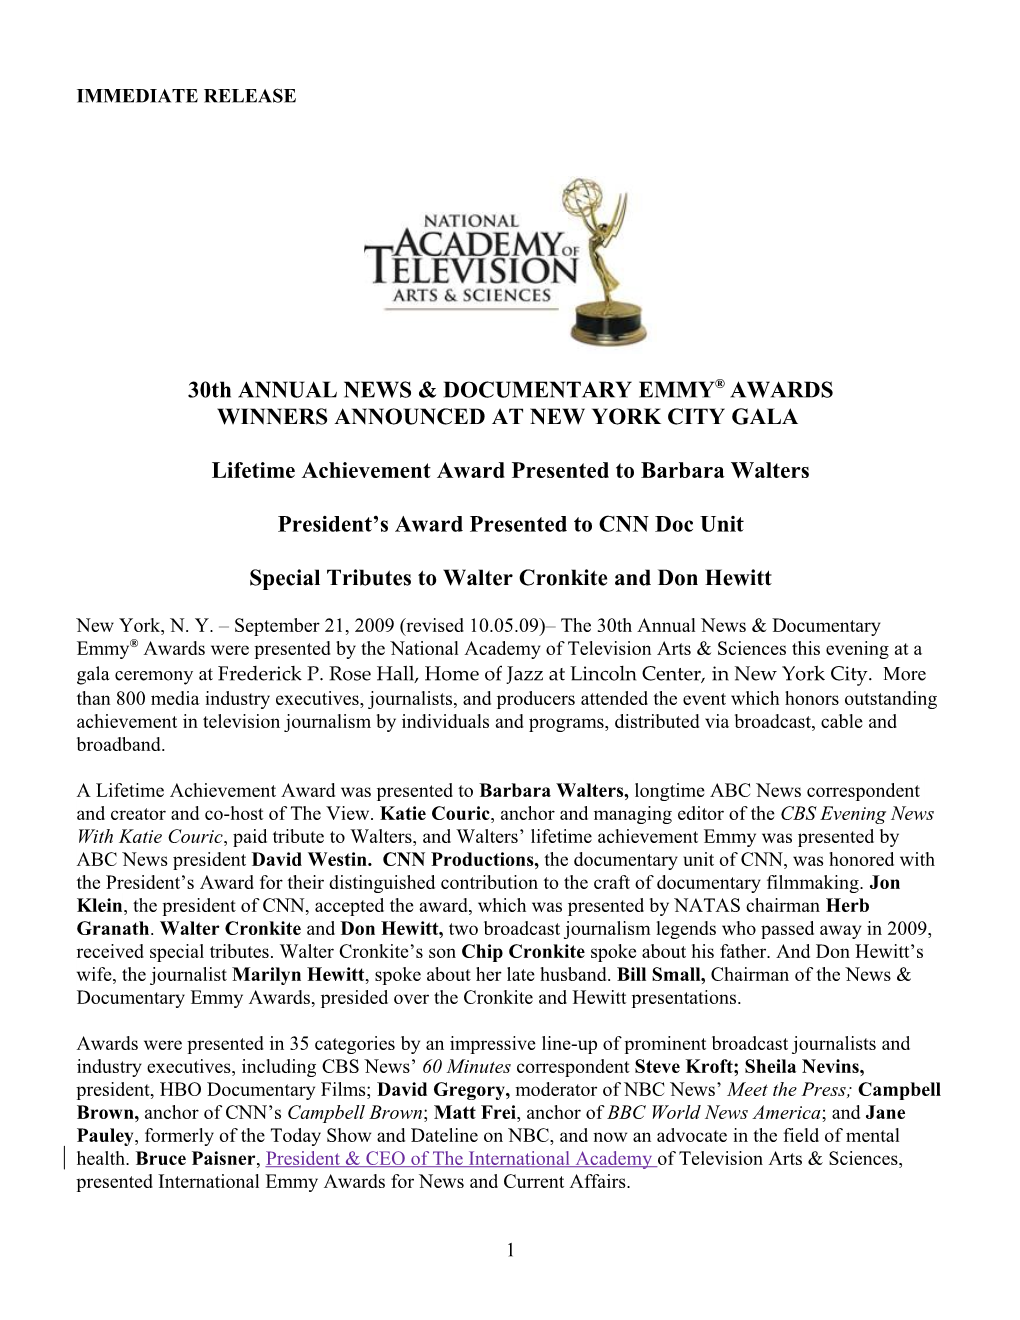 2003 News and Documentary Emmy Awards